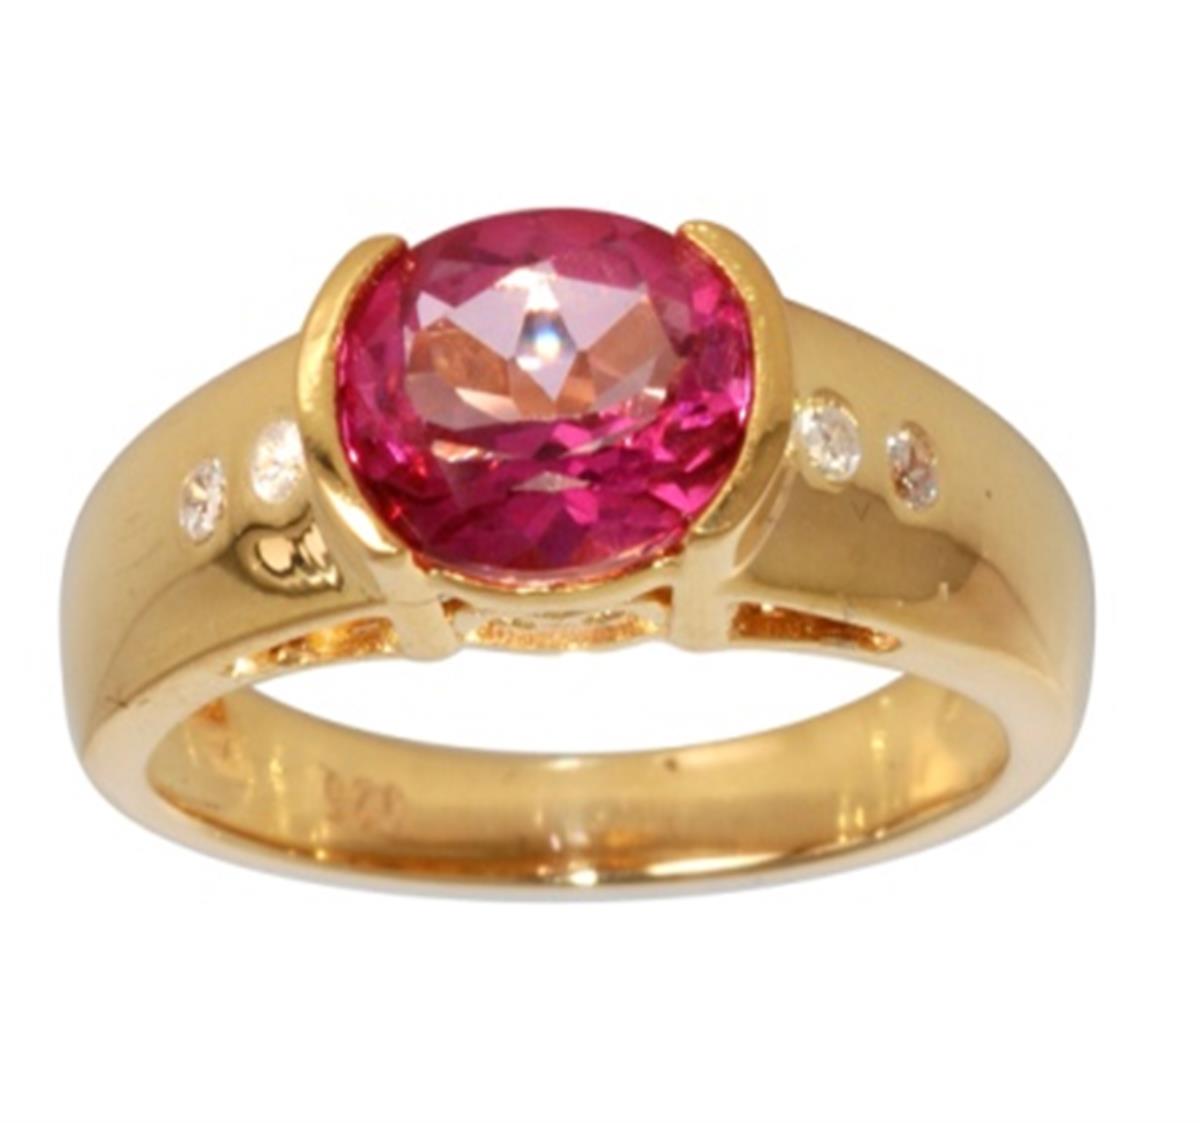 10K Yellow Gold 9x7mm Oval Cut Pink Topaz & White Zircon Half Bezel Fashion Ring